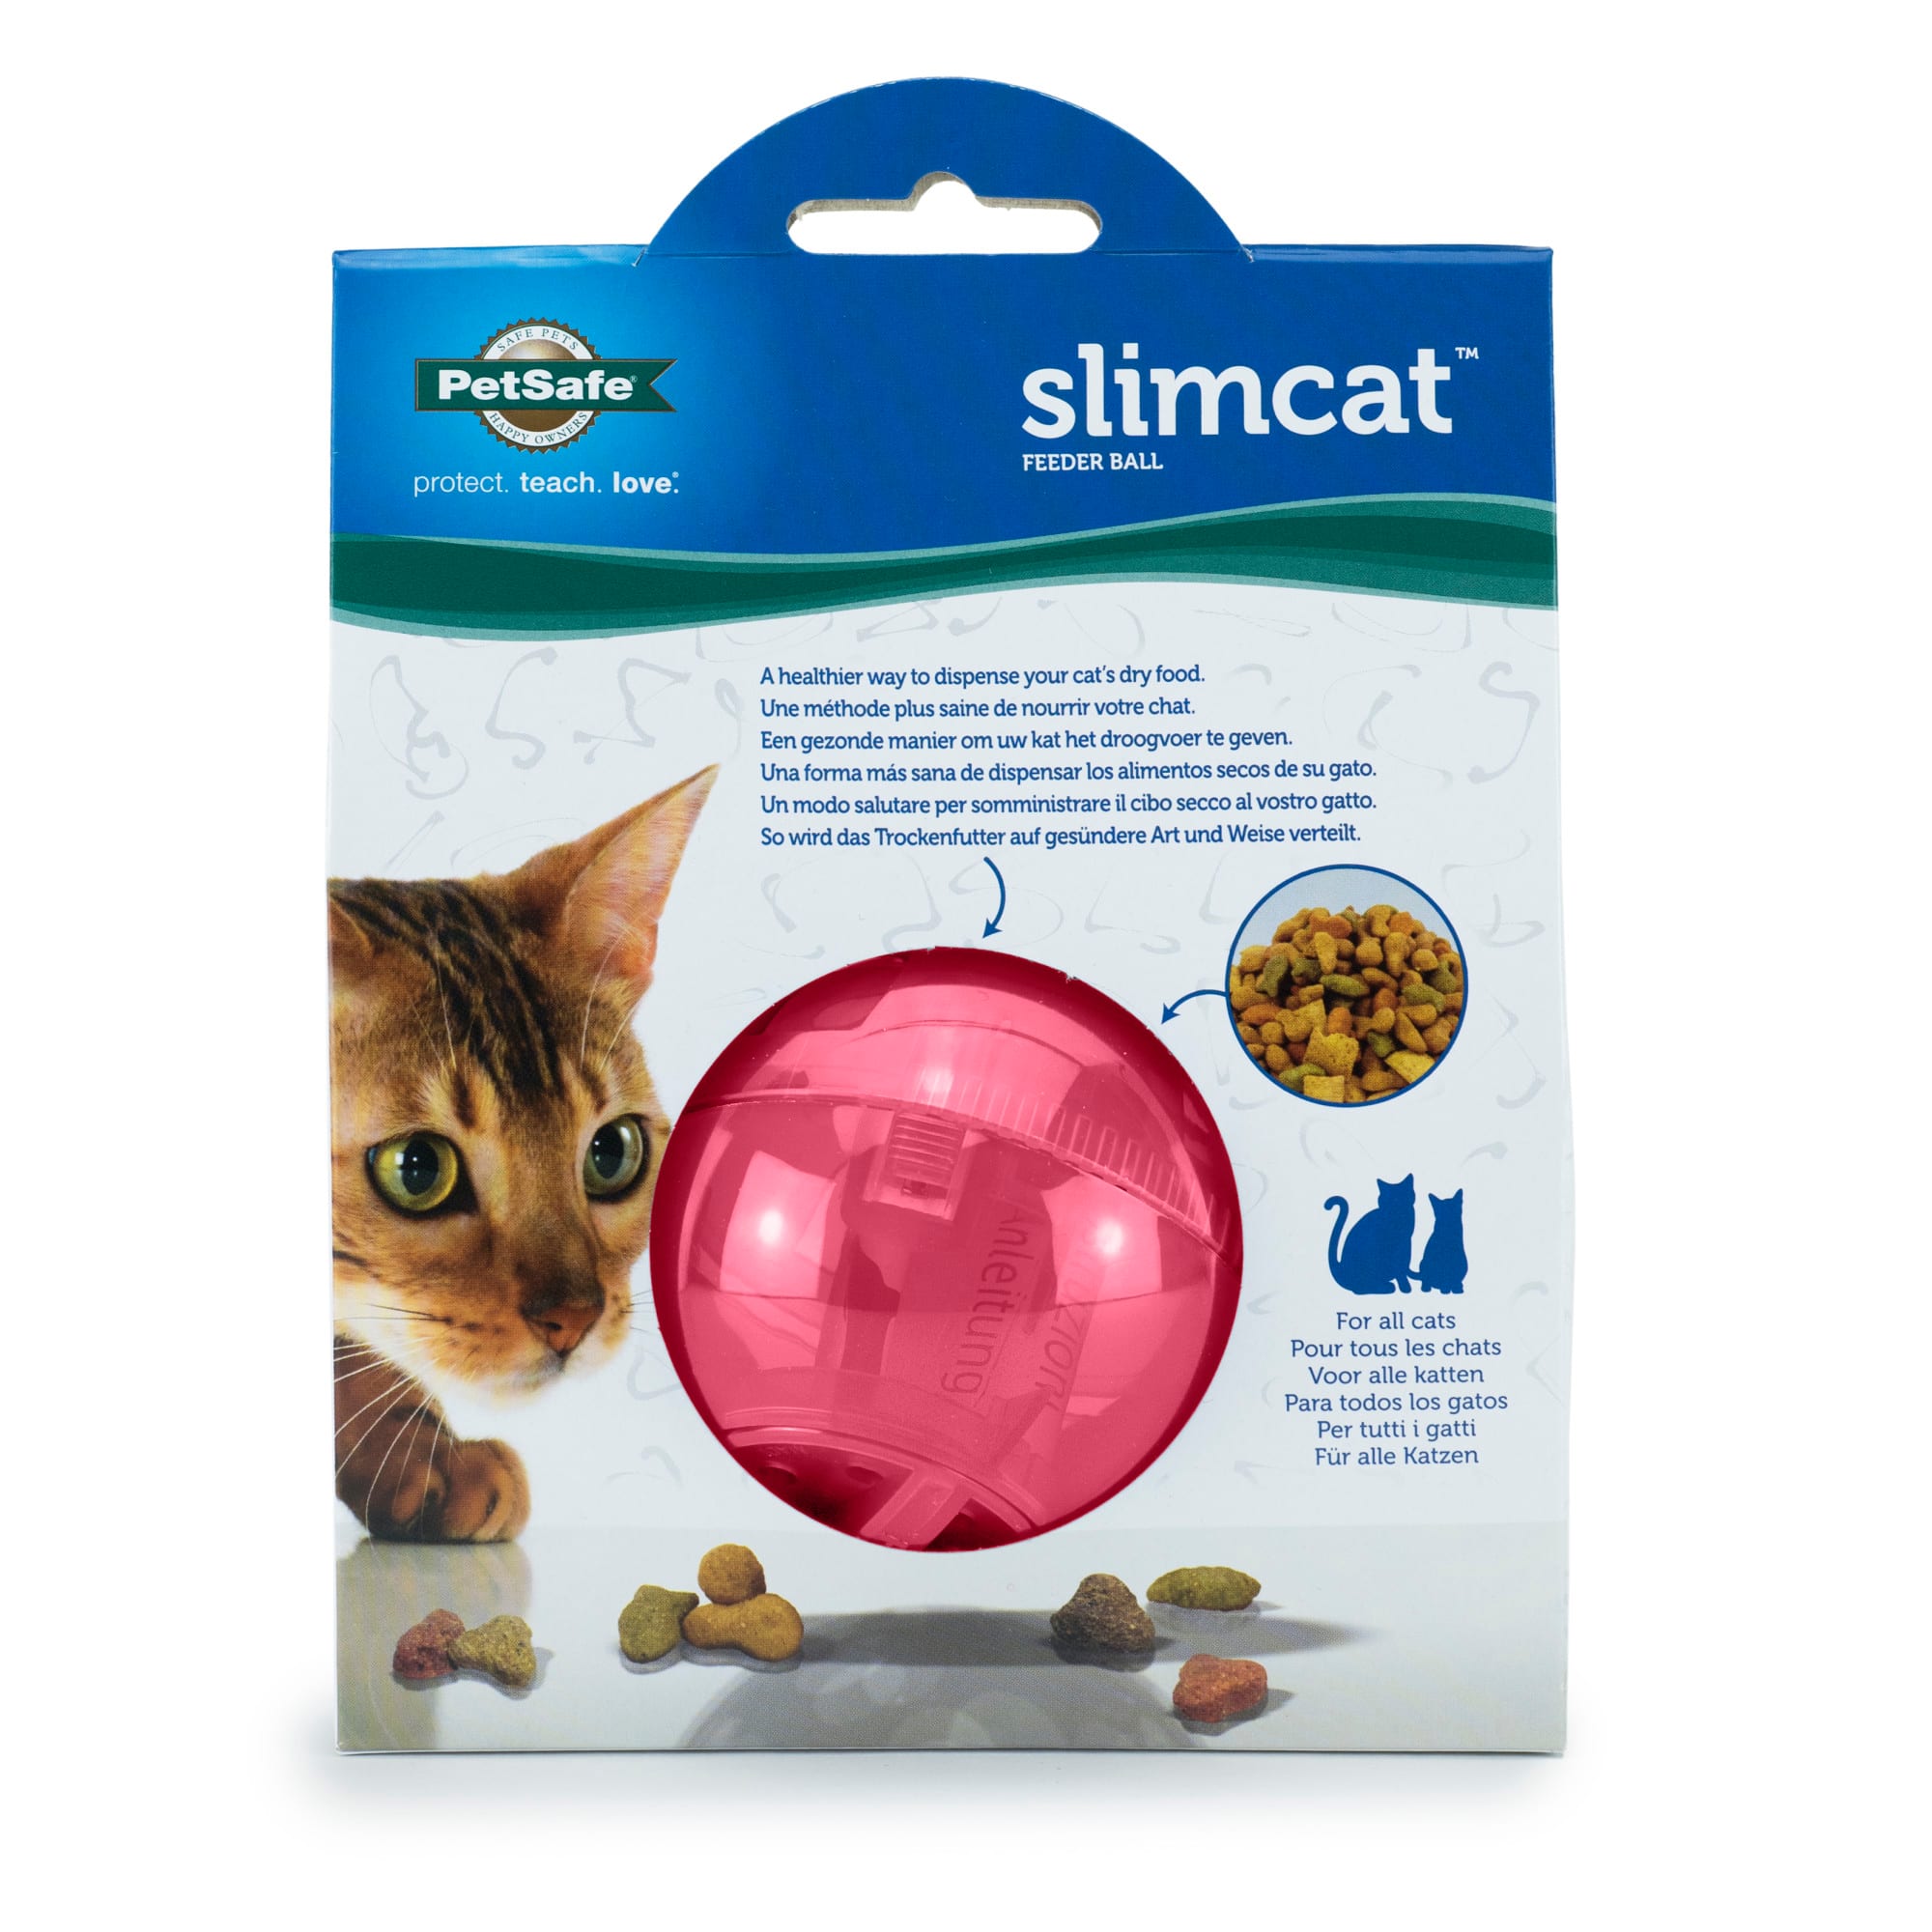 PetSafe SlimCat Cat Food Dispenser in 